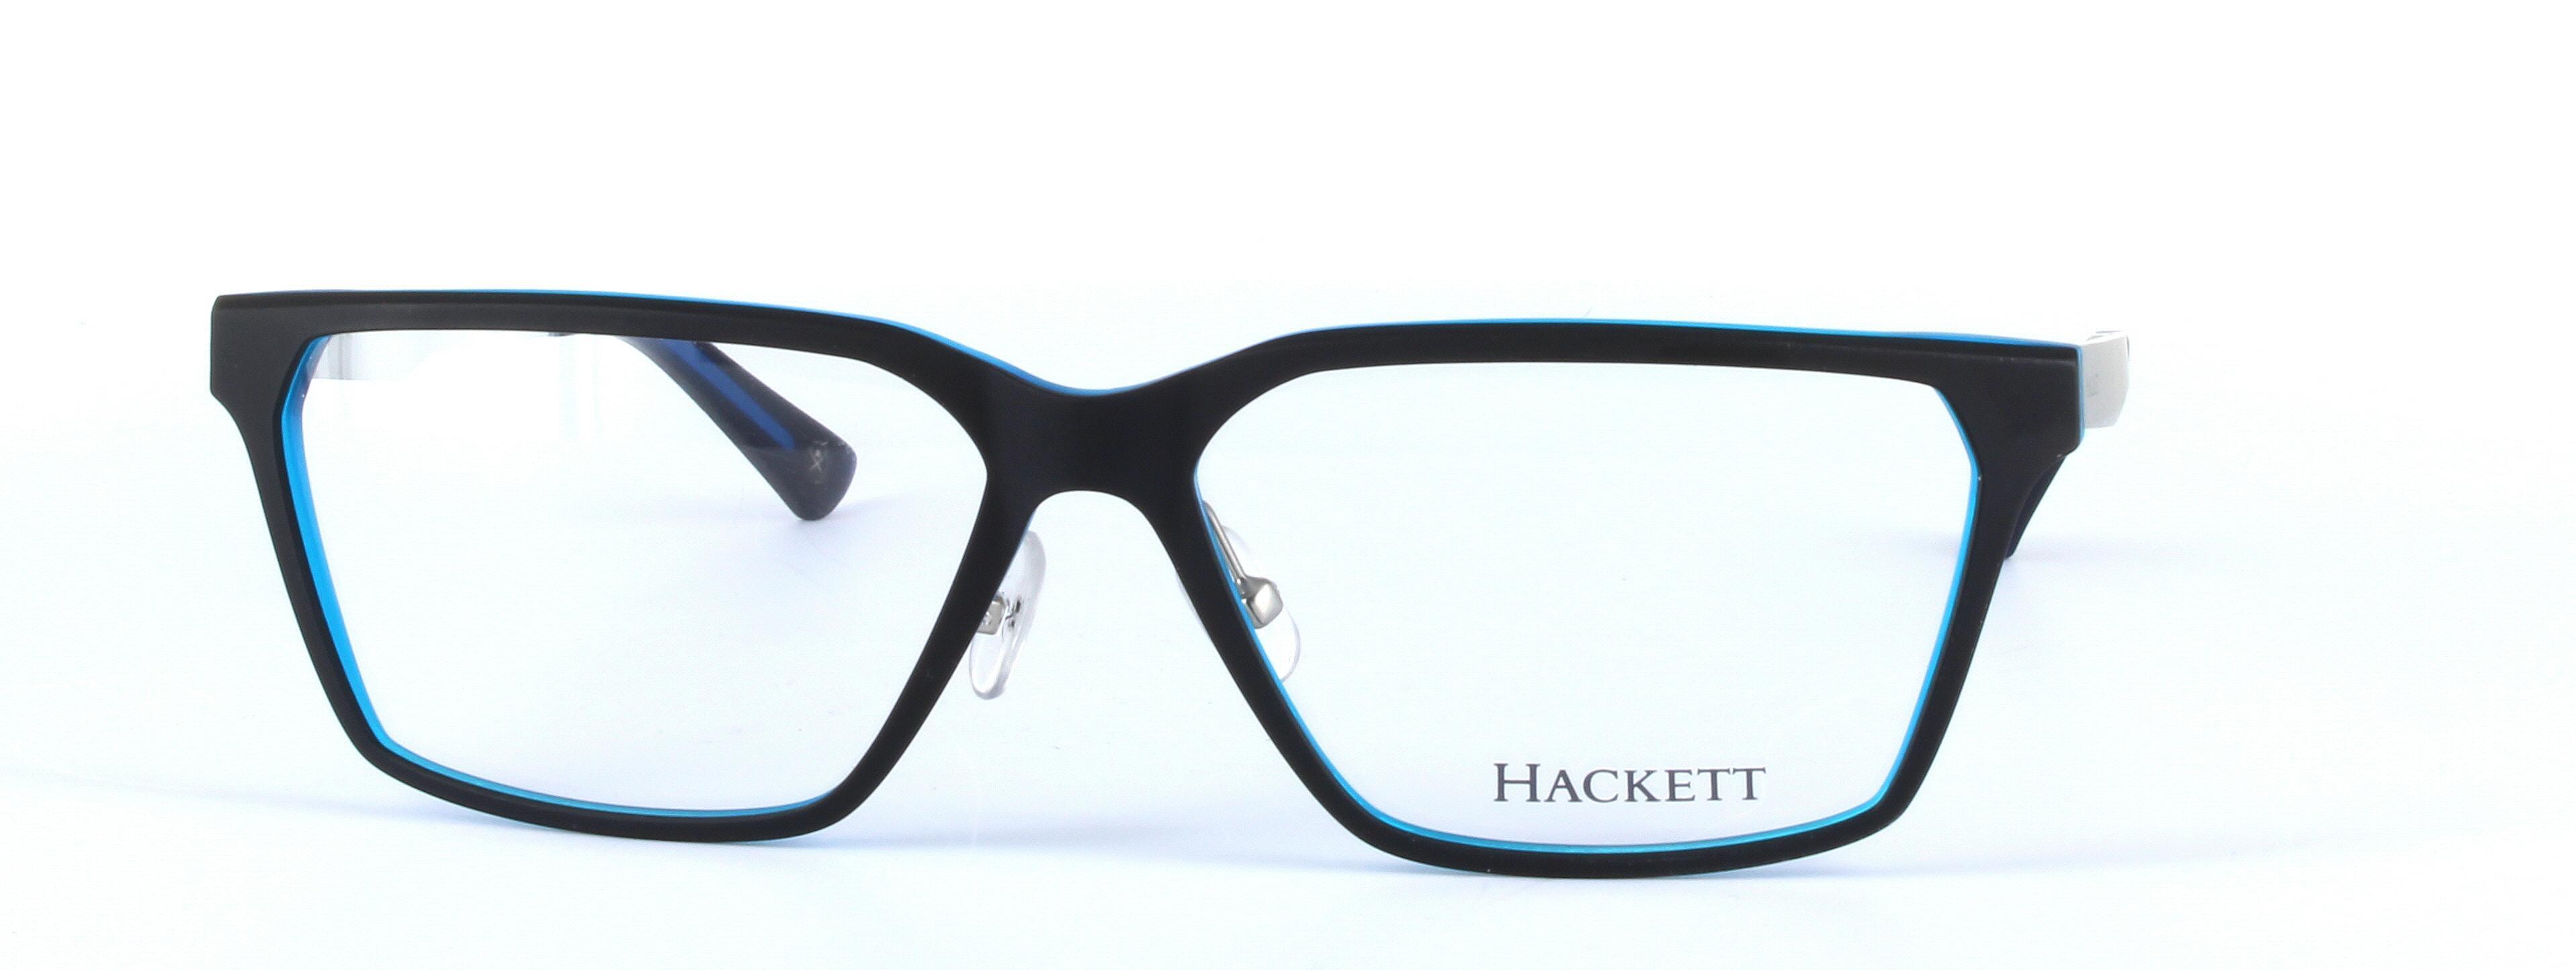 HACKETT (HEK1156-041) Black Full Rim Rectangular Acetate Glasses - Image View 5